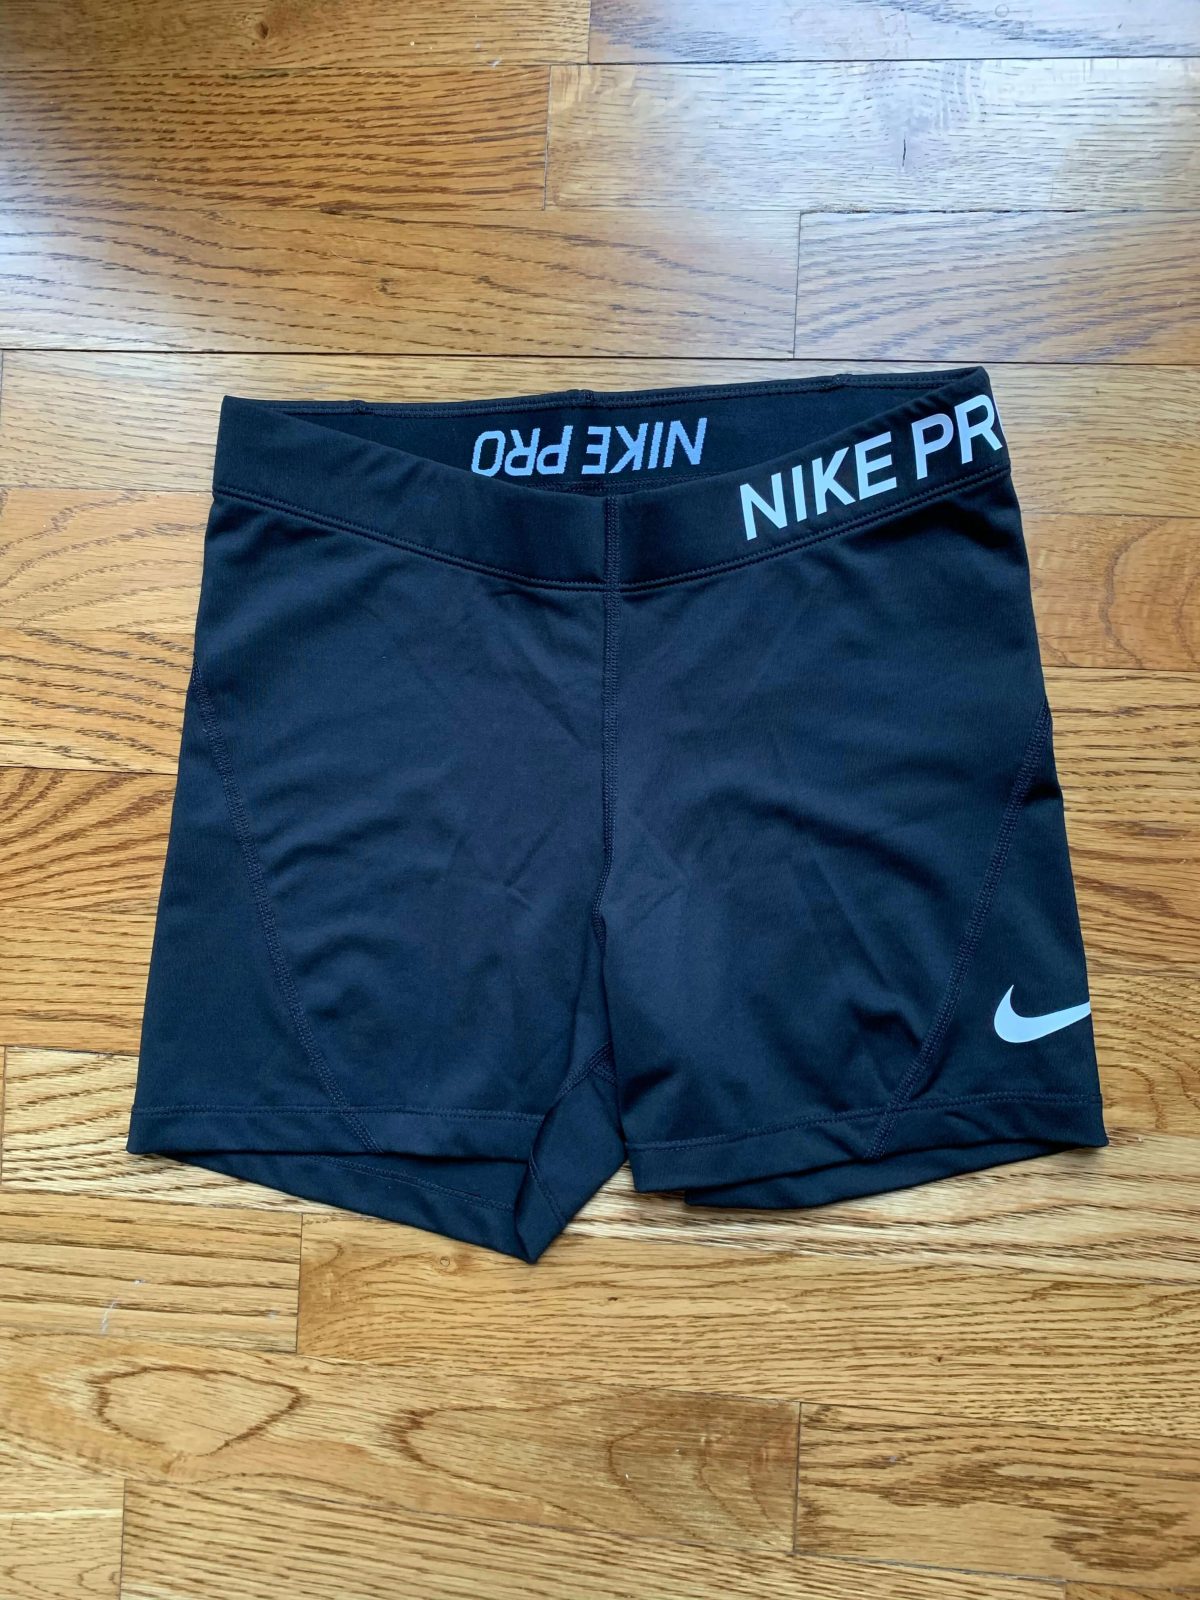  Nike Pro Volleyball Shorts